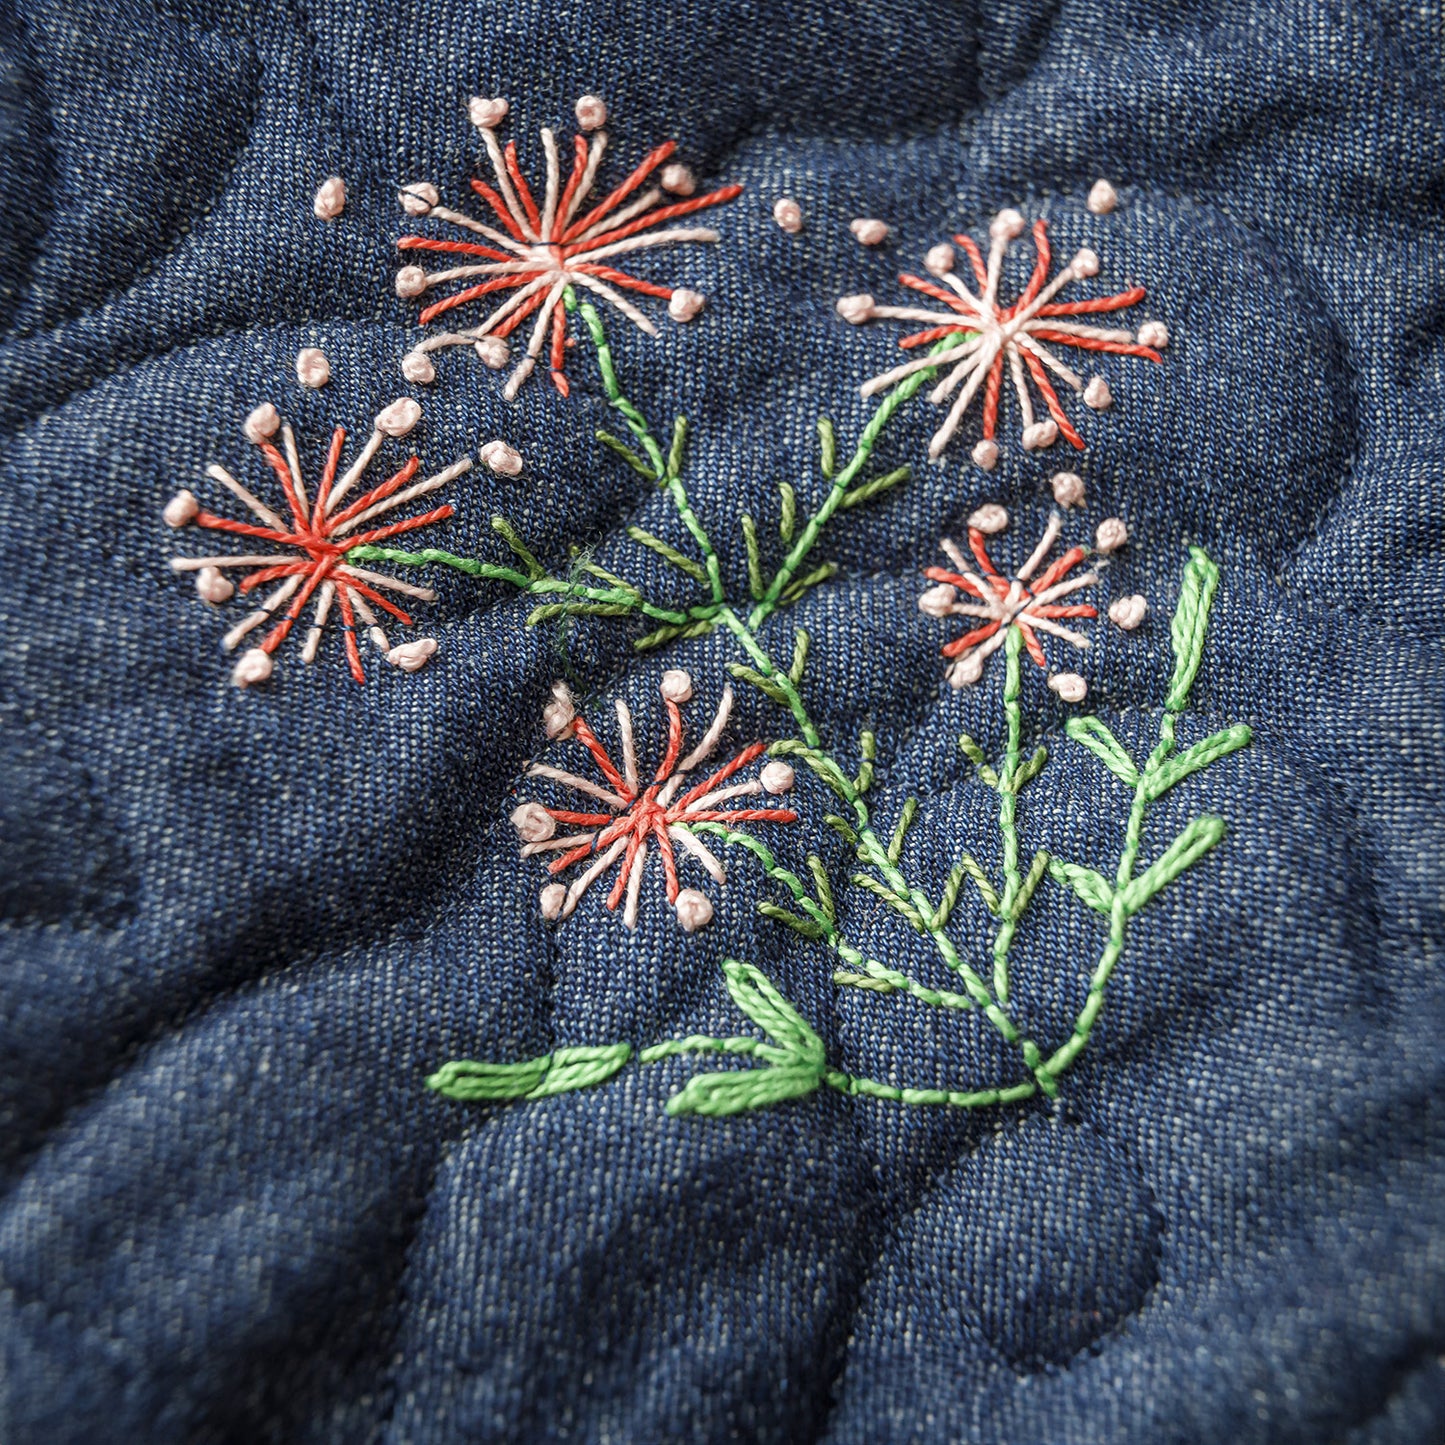 PREORDER - Ingrid's Wildflowers - An Heirloom Embroidery Kit by Missouri Star Alternative View #36